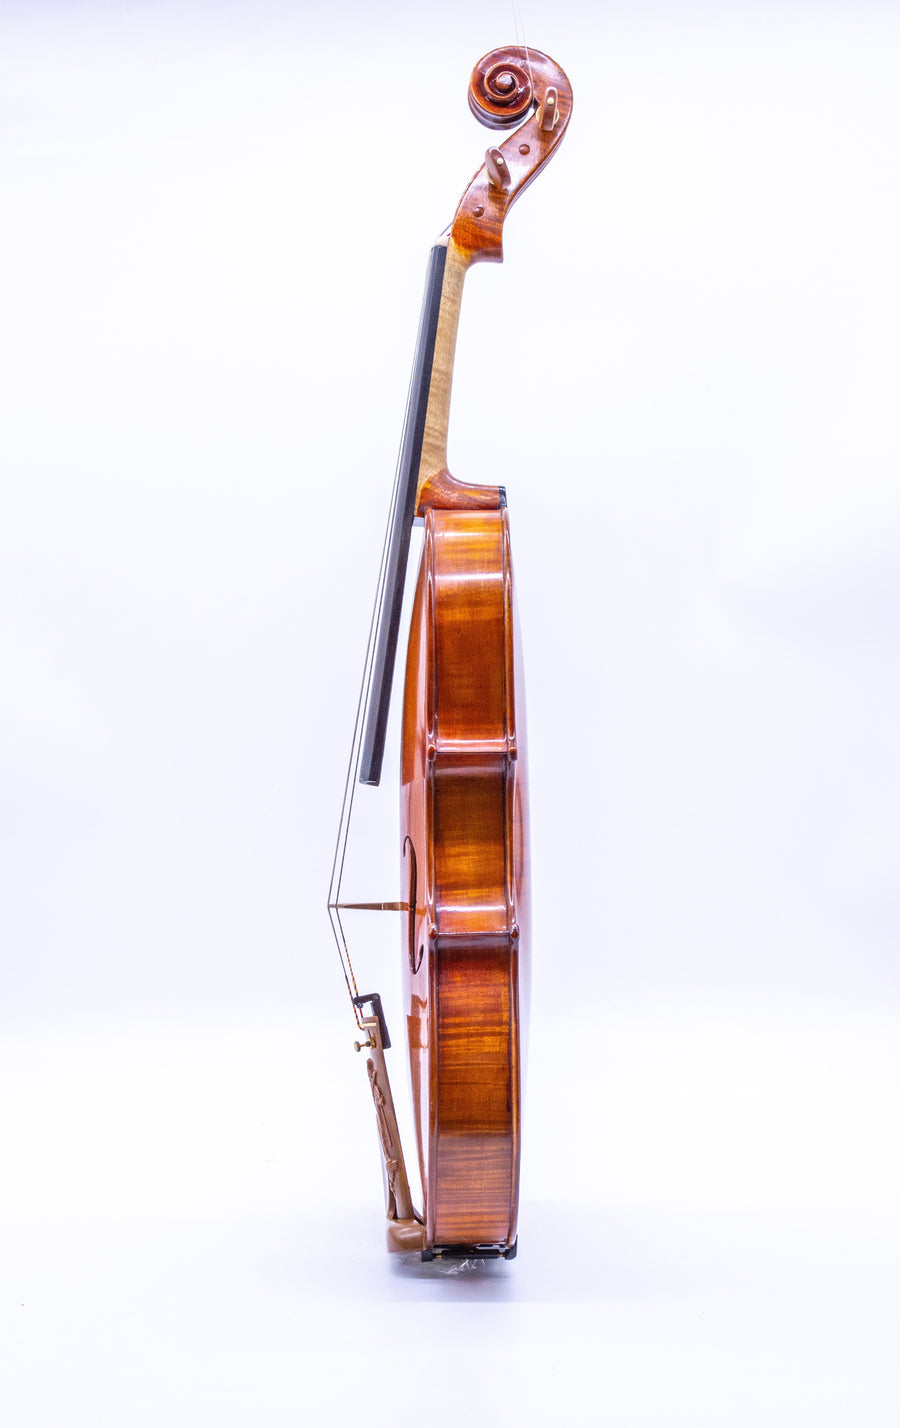 A Contemporary American Viola by John Vincent Importuno, 1998. 16 1/2”